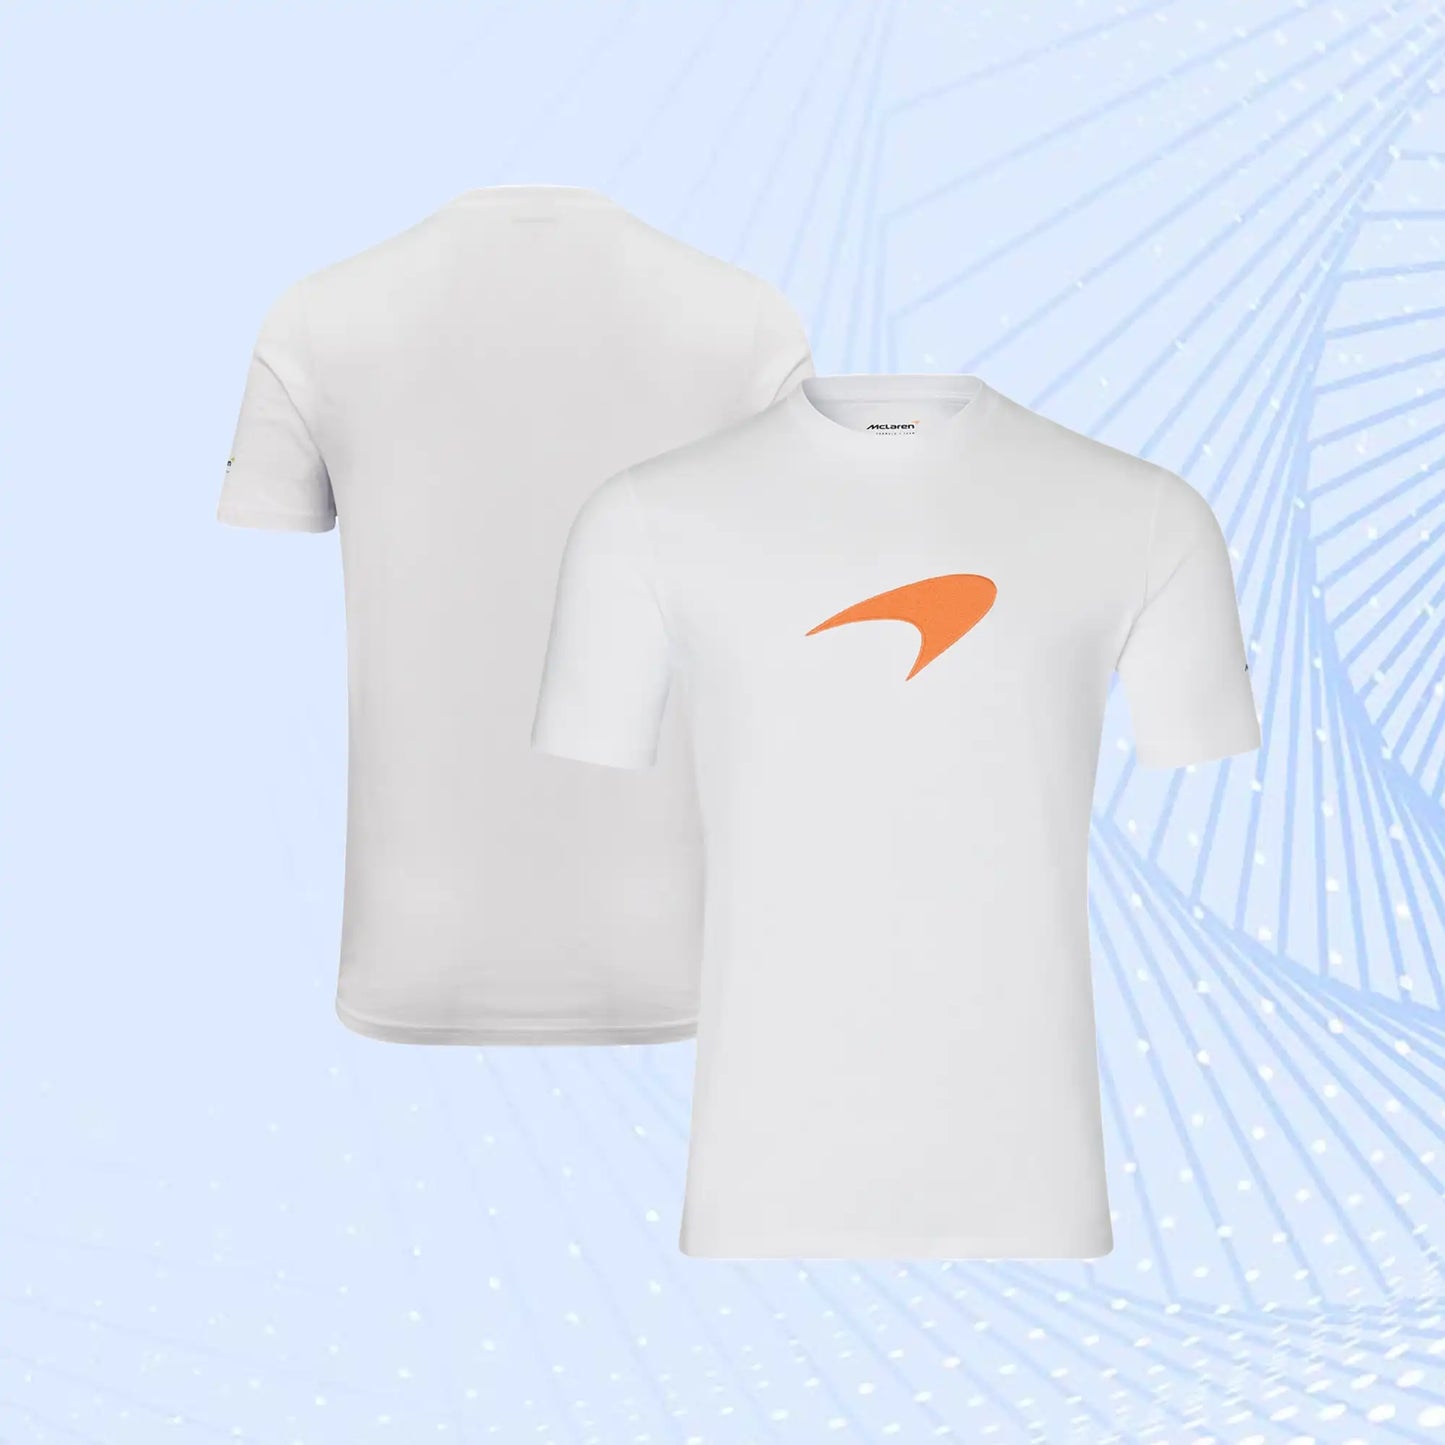 McLaren Speedmark T-Shirt